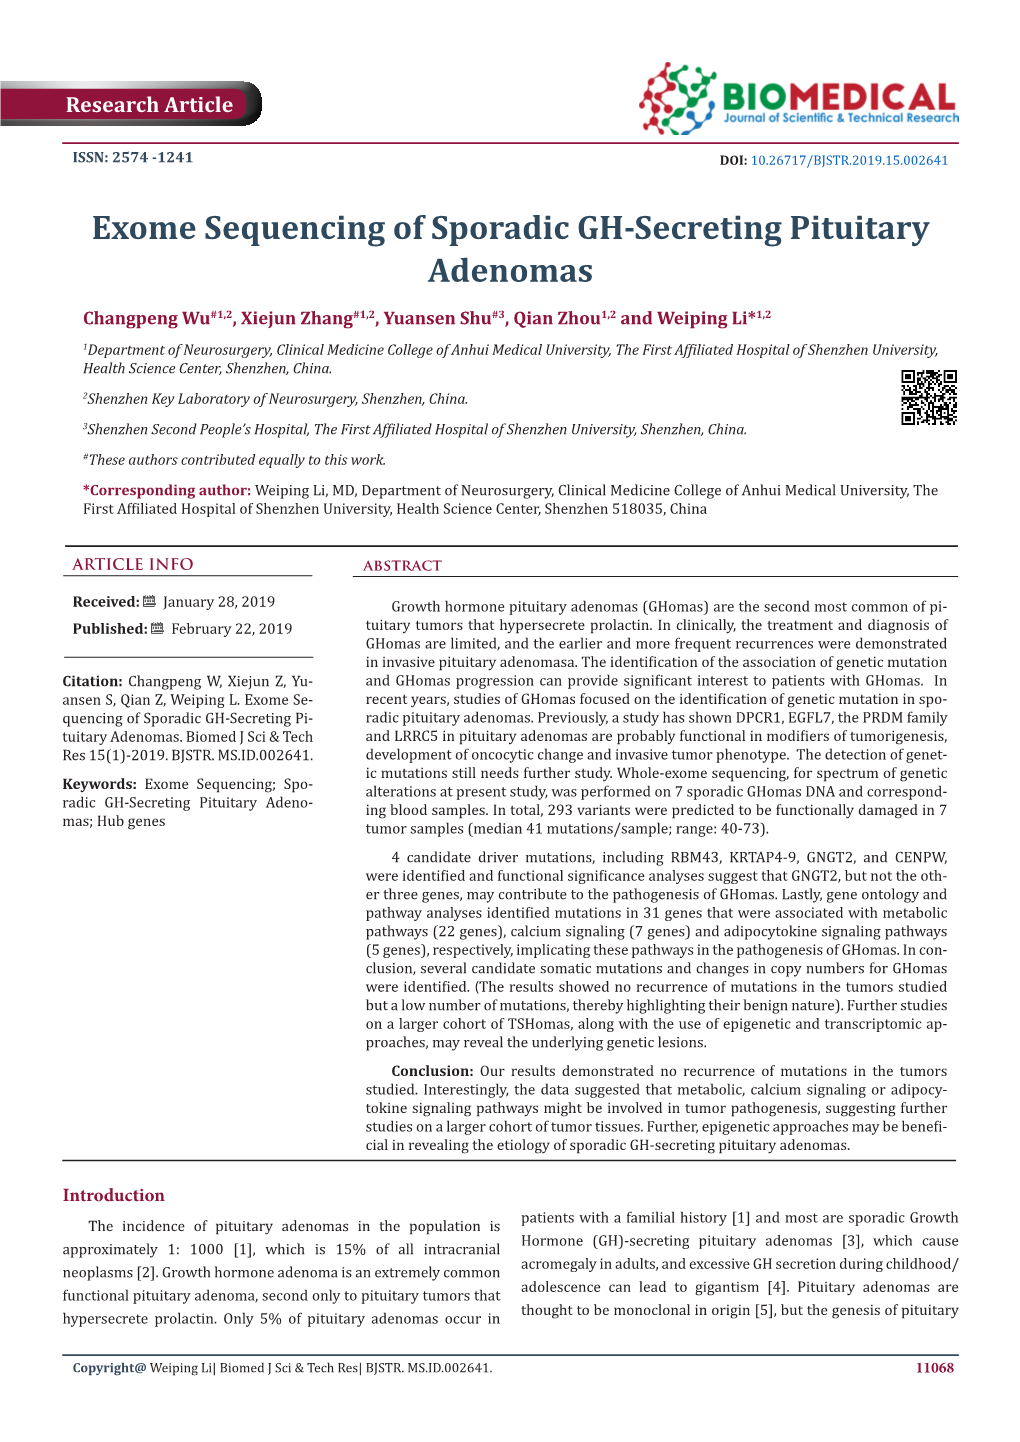 Exome Sequencing of Sporadic GH-Secreting Pituitary Adenomas